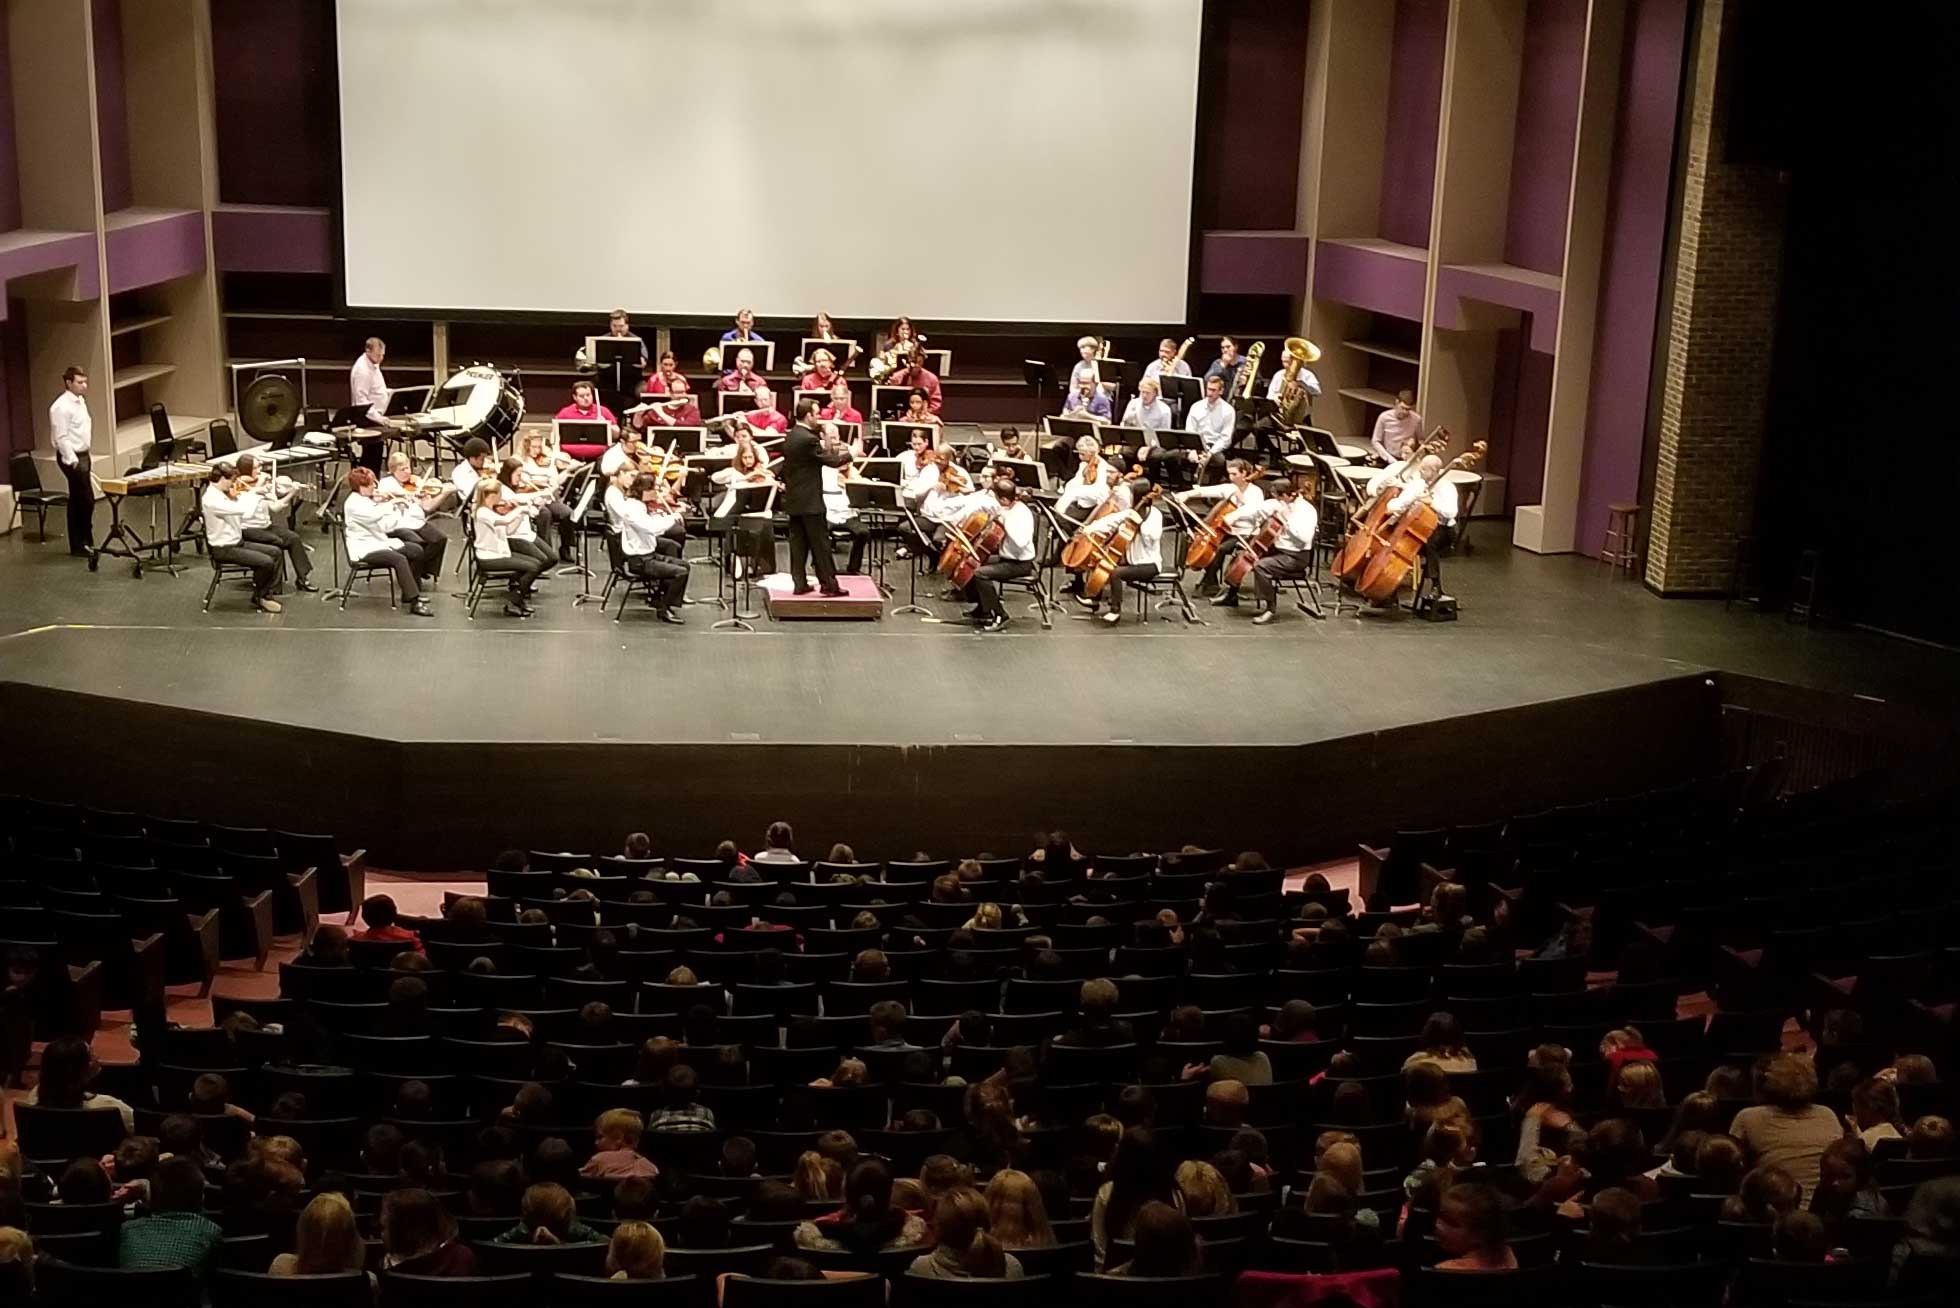 MACI Supports Youth Education Program At Jackson Symphony Orchestra